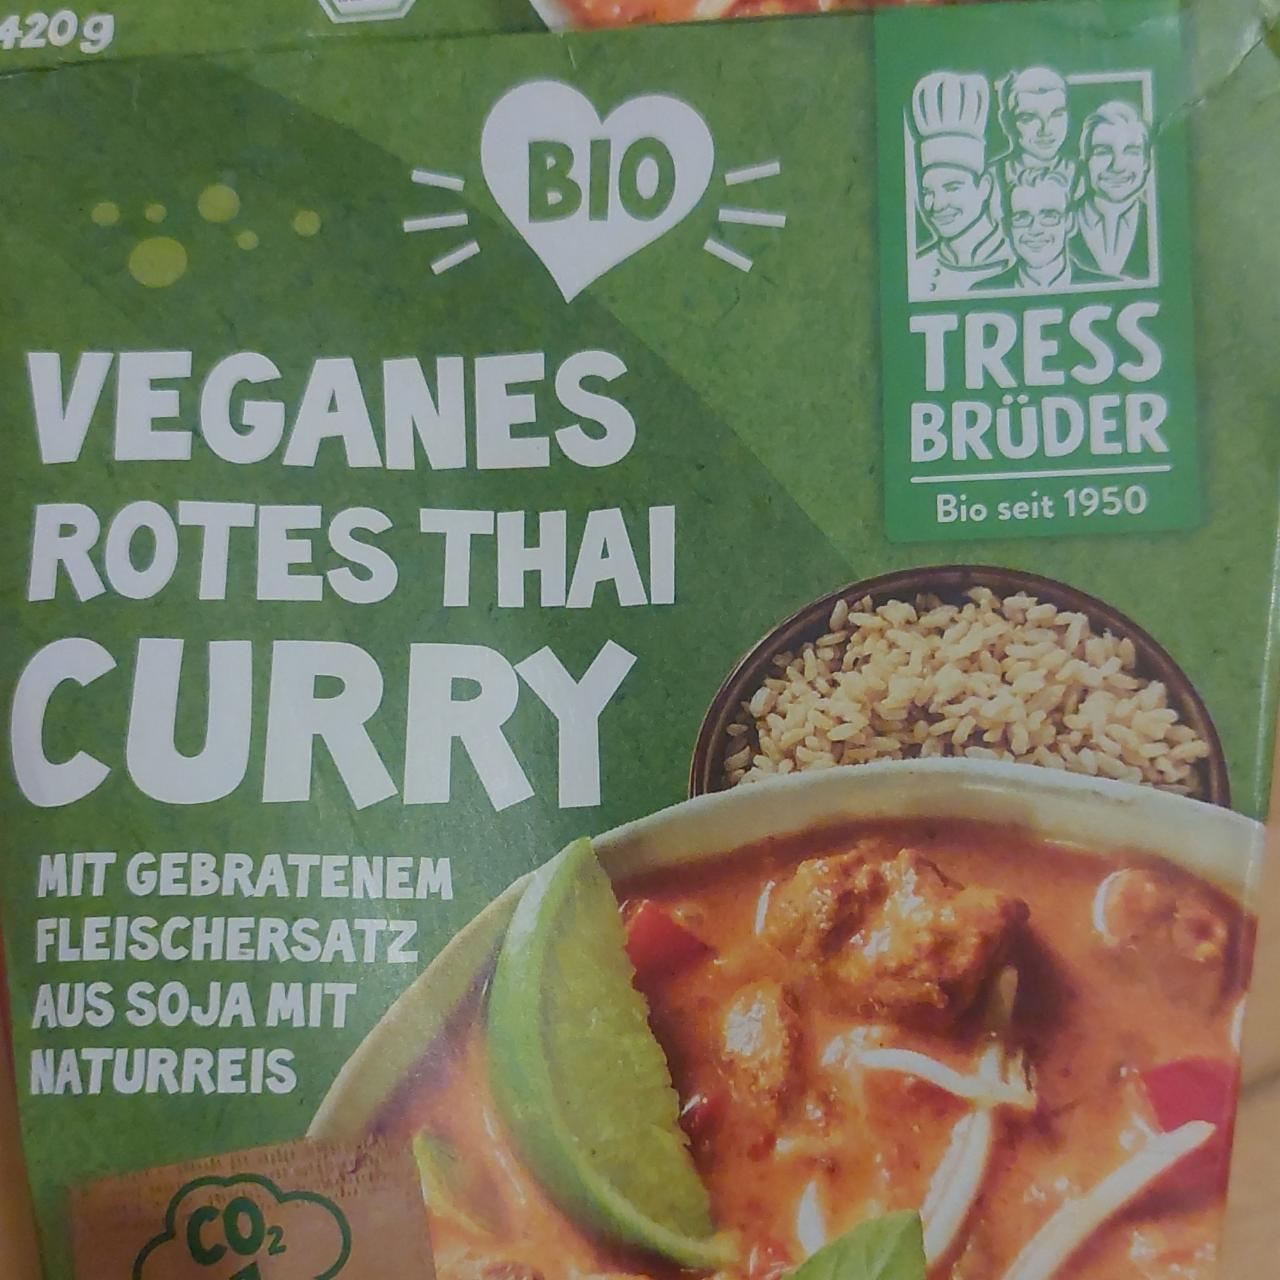 Fotografie - Veganes Rotes Thai Curry Tress Brüder